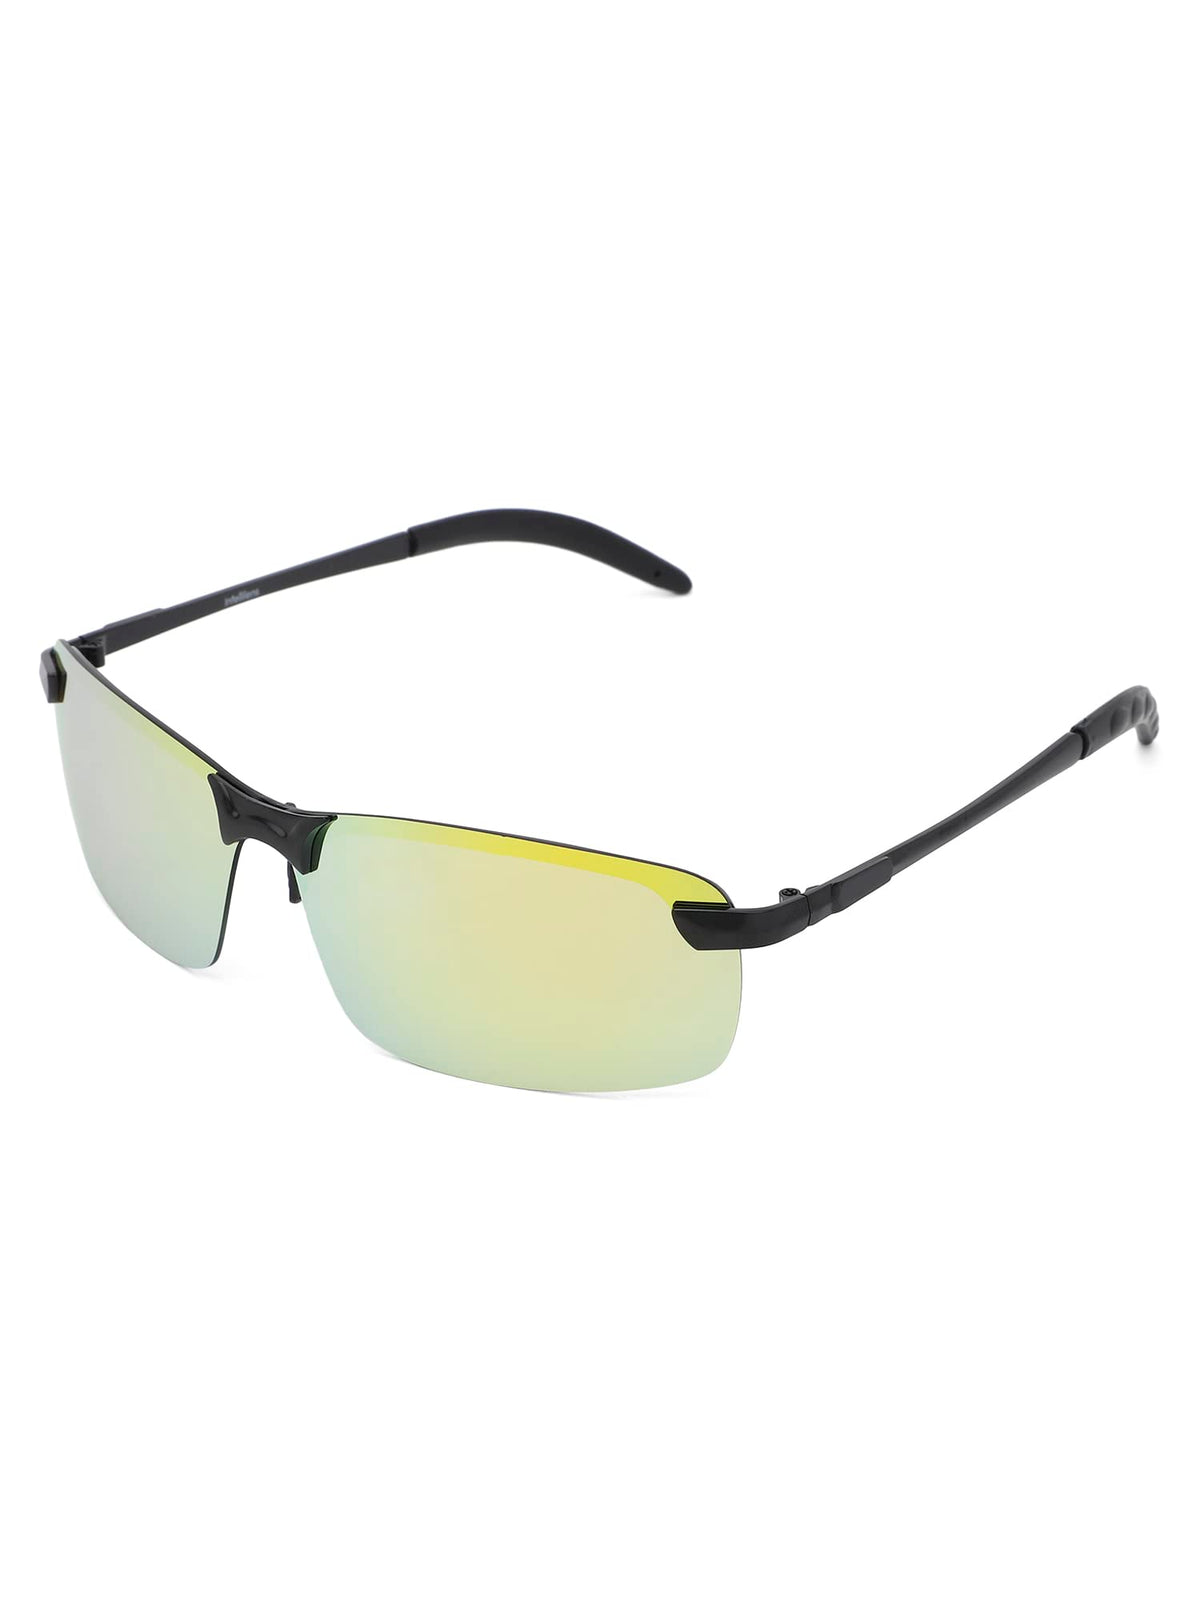 REACH Night Driving Polarized & UV Protected Sunglasses For Men & Women | Goggles for Men & Women (66-20-135)